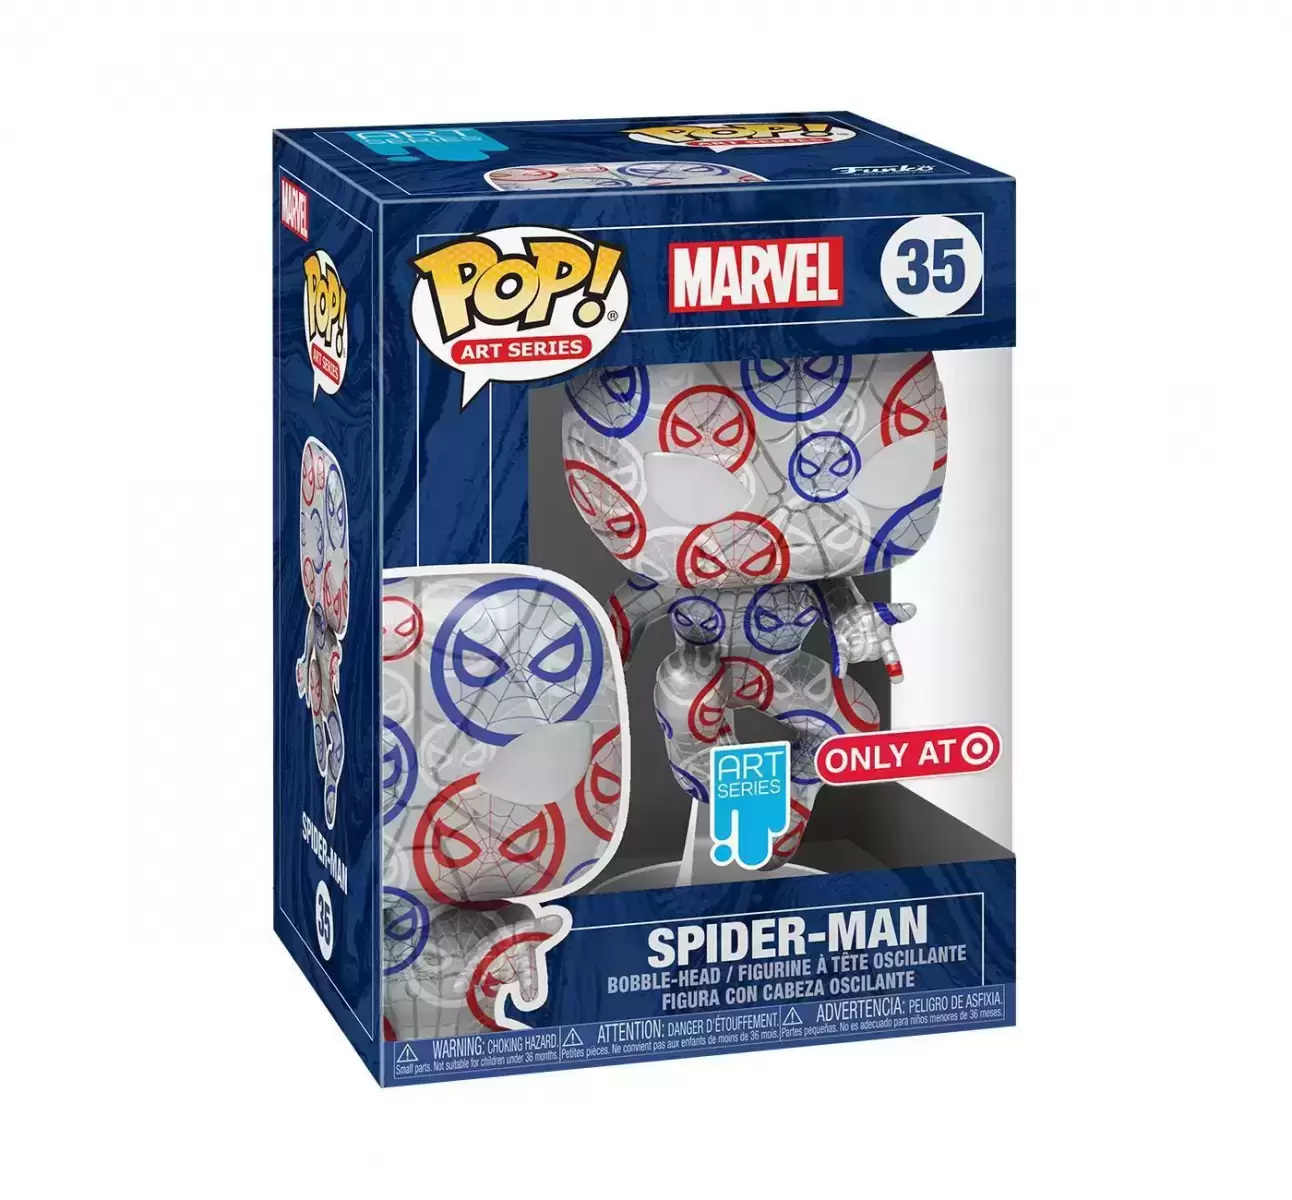 POP! Art Series - Marvel - Spider-Man